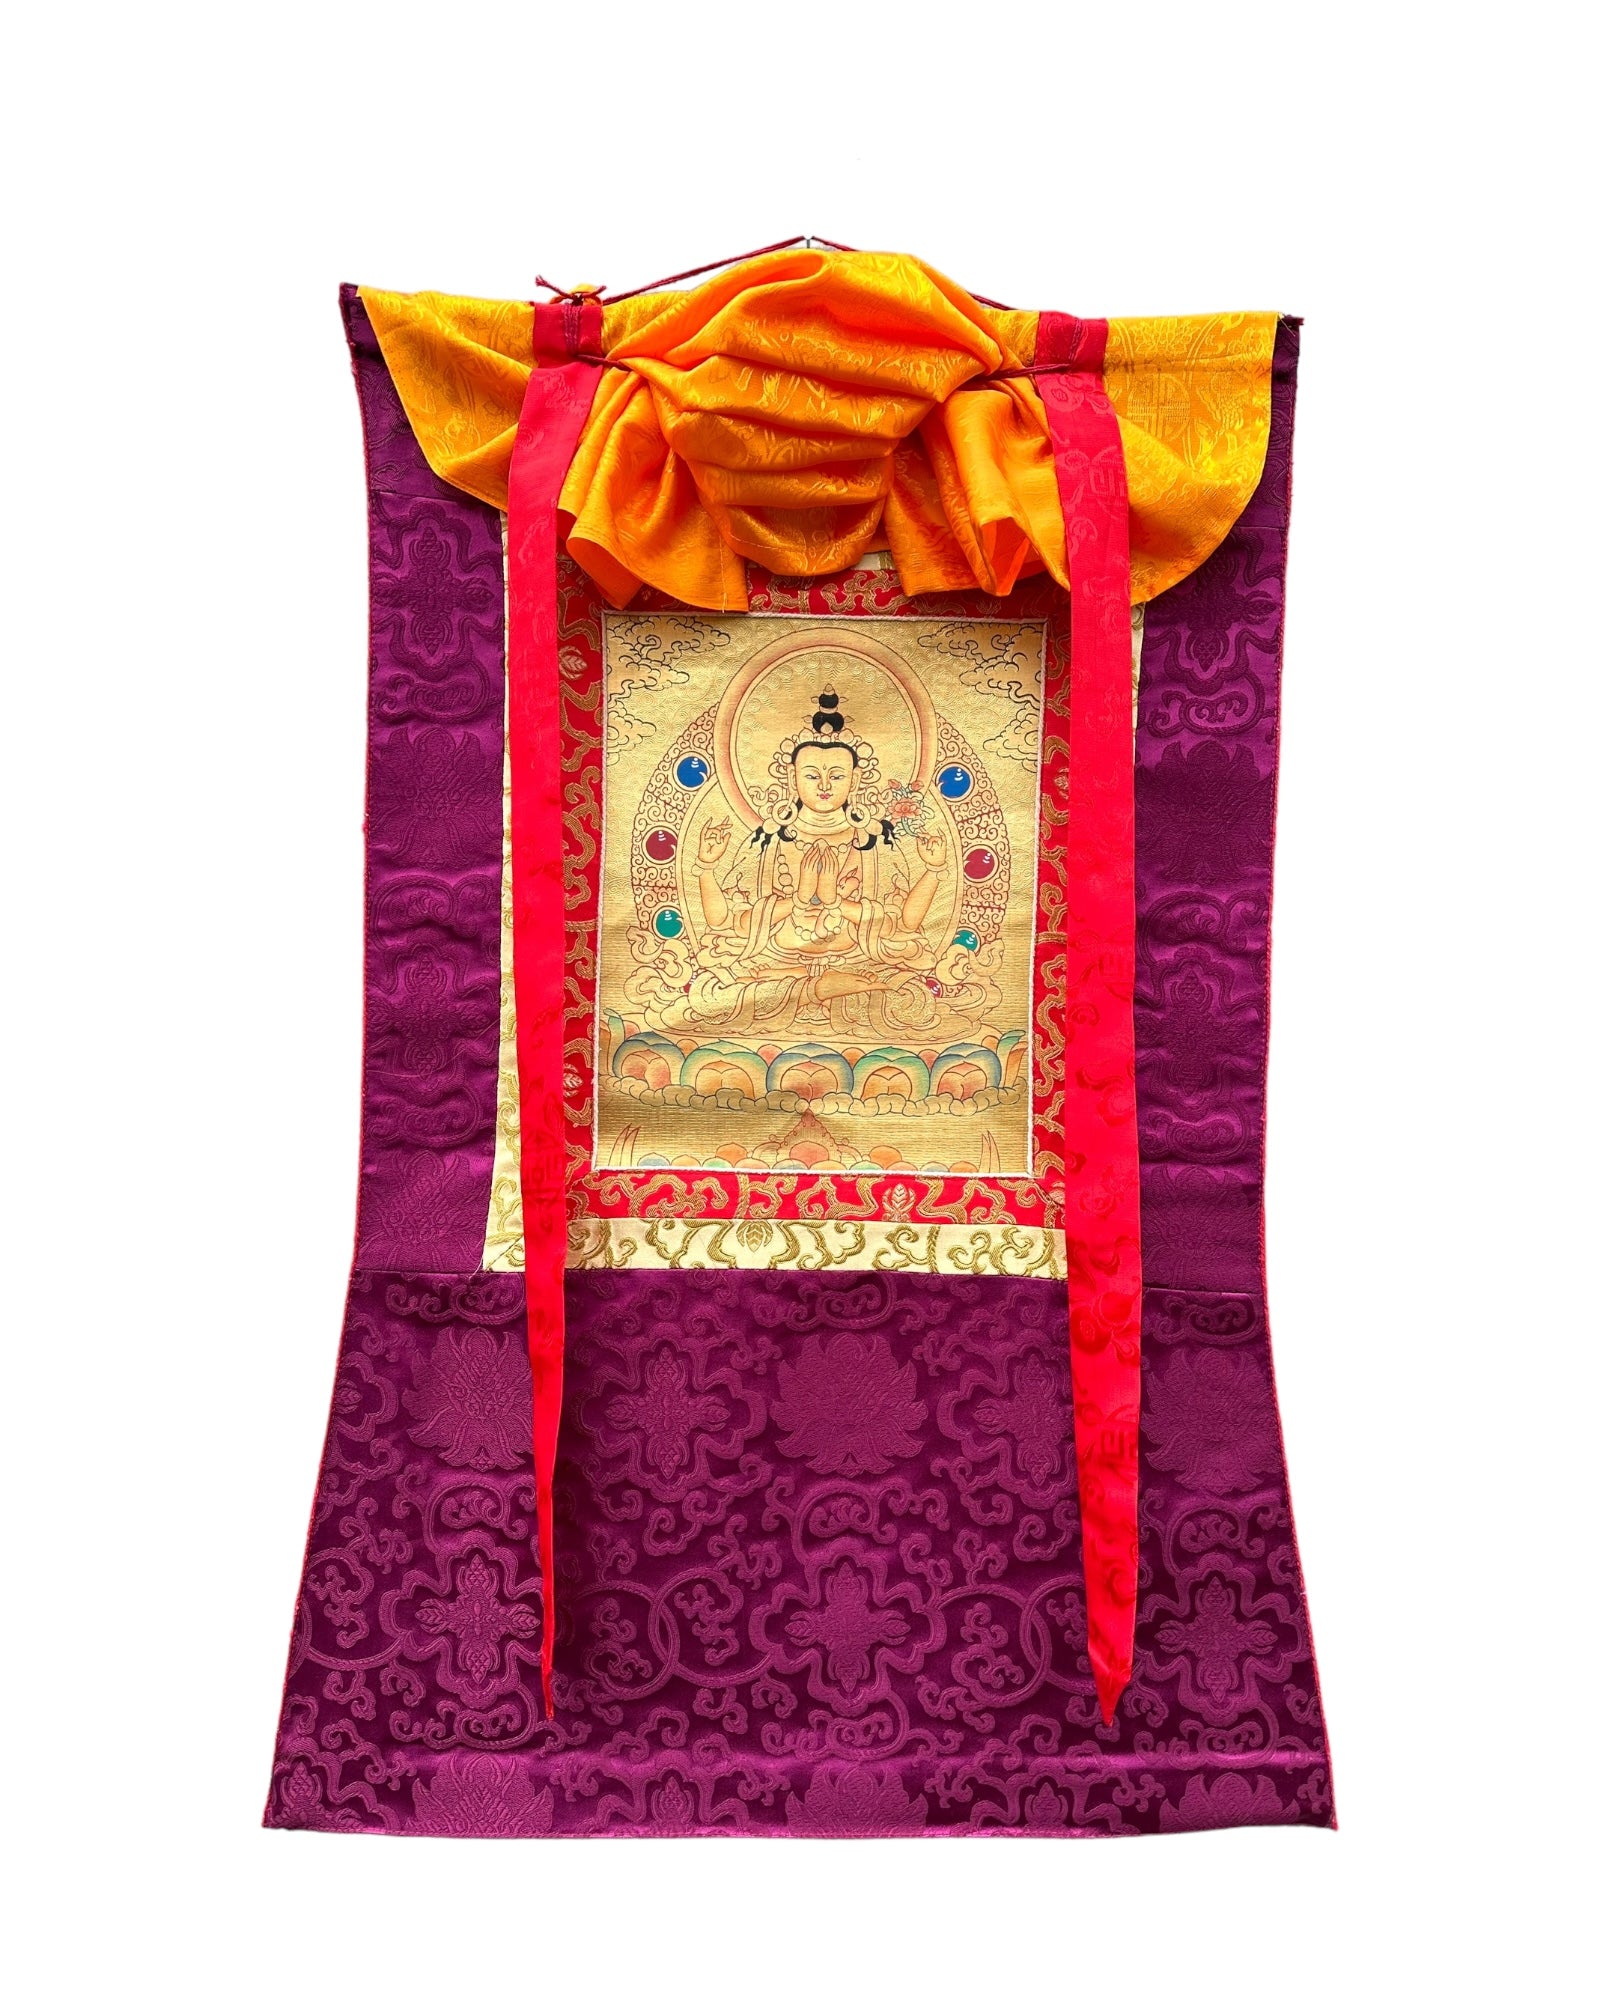 Avalokiteshvara Handcrafted Thangka